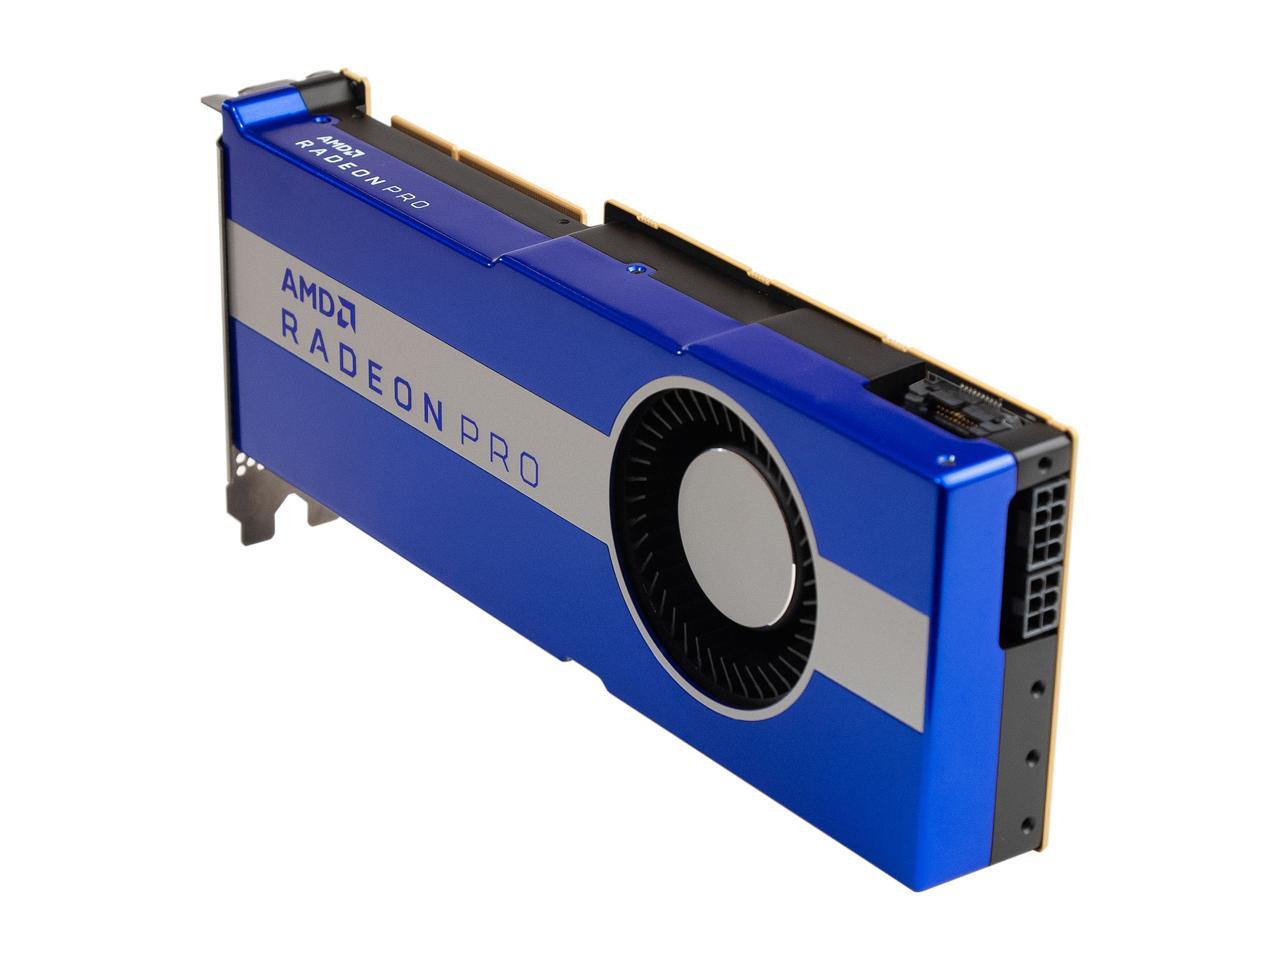 Amd Radeon Pro Vii 100-506163 16Gb 4096-Bit Hbm2 Pci Express 4.0 X16 Pcie Add-In Card Workstation Video Card